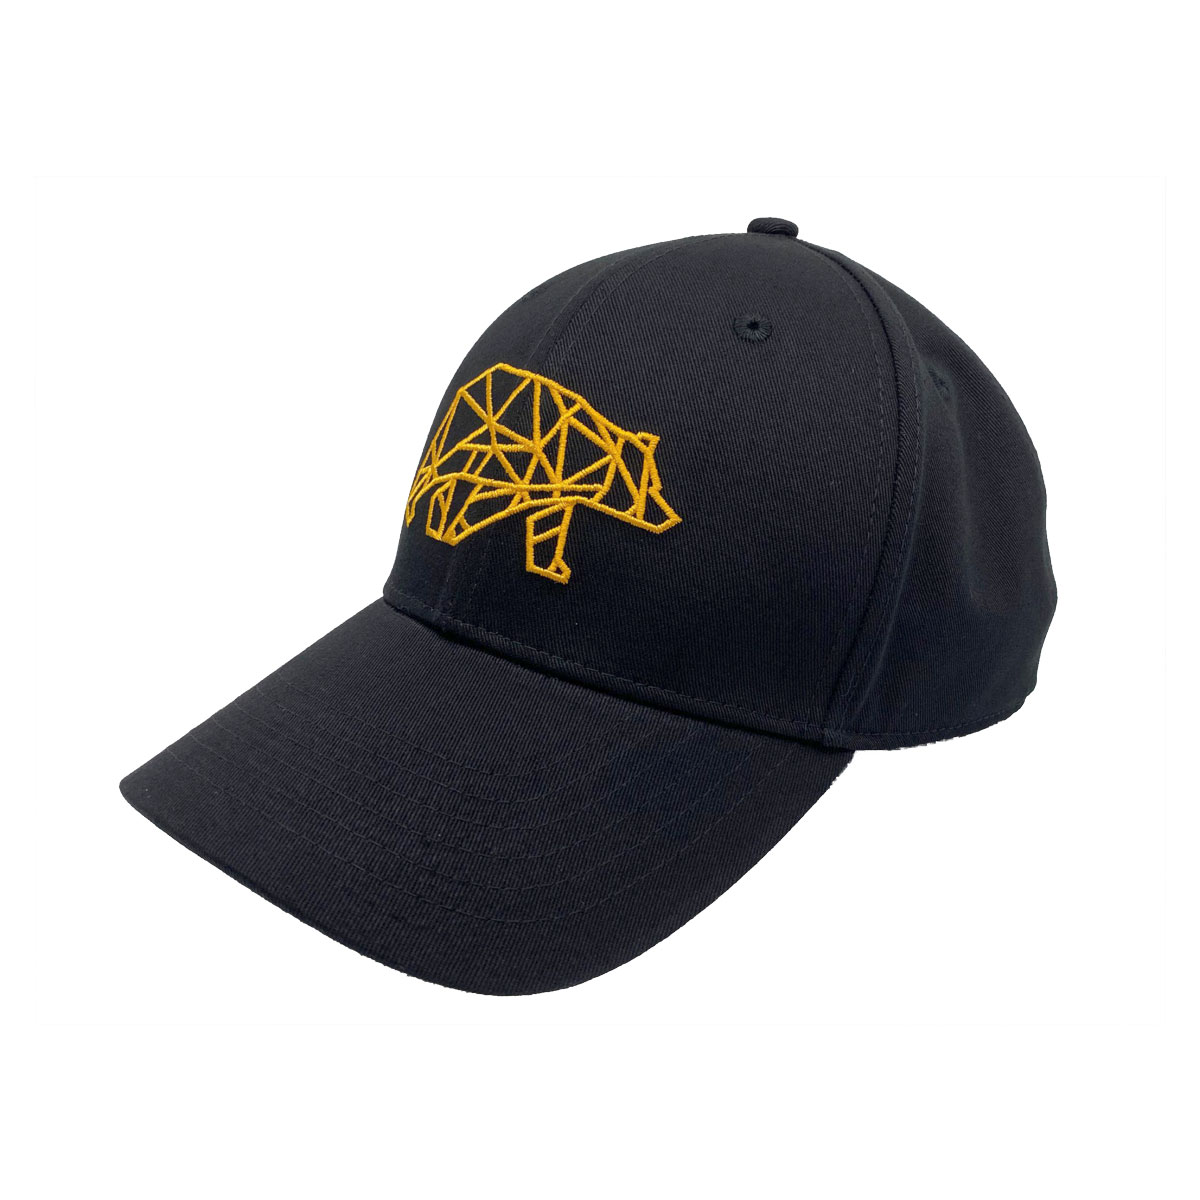 FORSBERG schwarze Cap mit gelbem Logo - 1